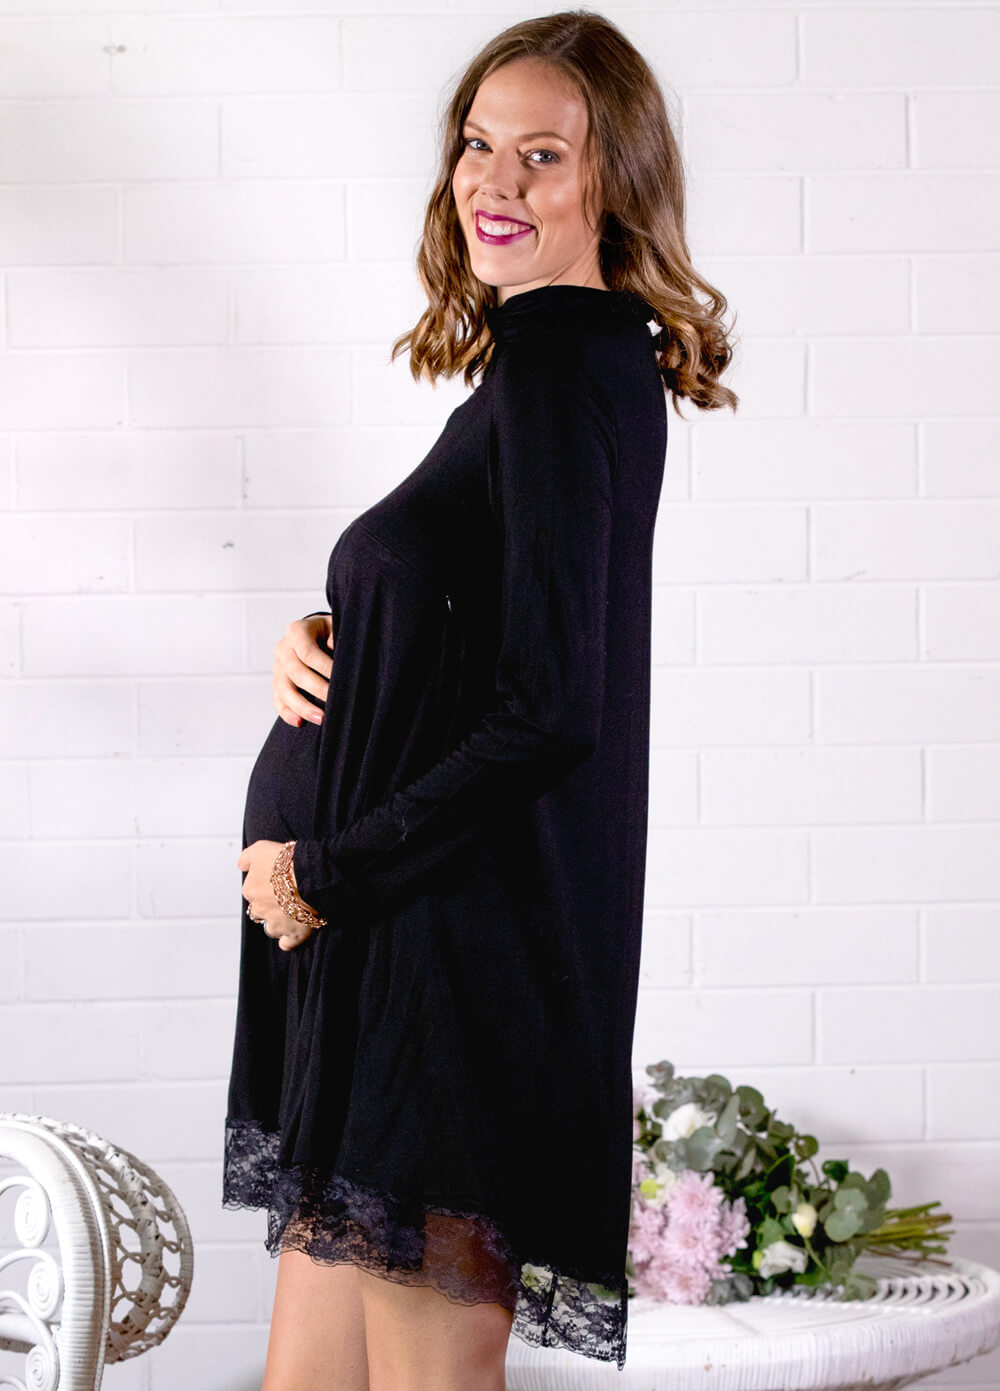 Revel Lace Hem Maternity Nursing Dress in Black by Lait & Co